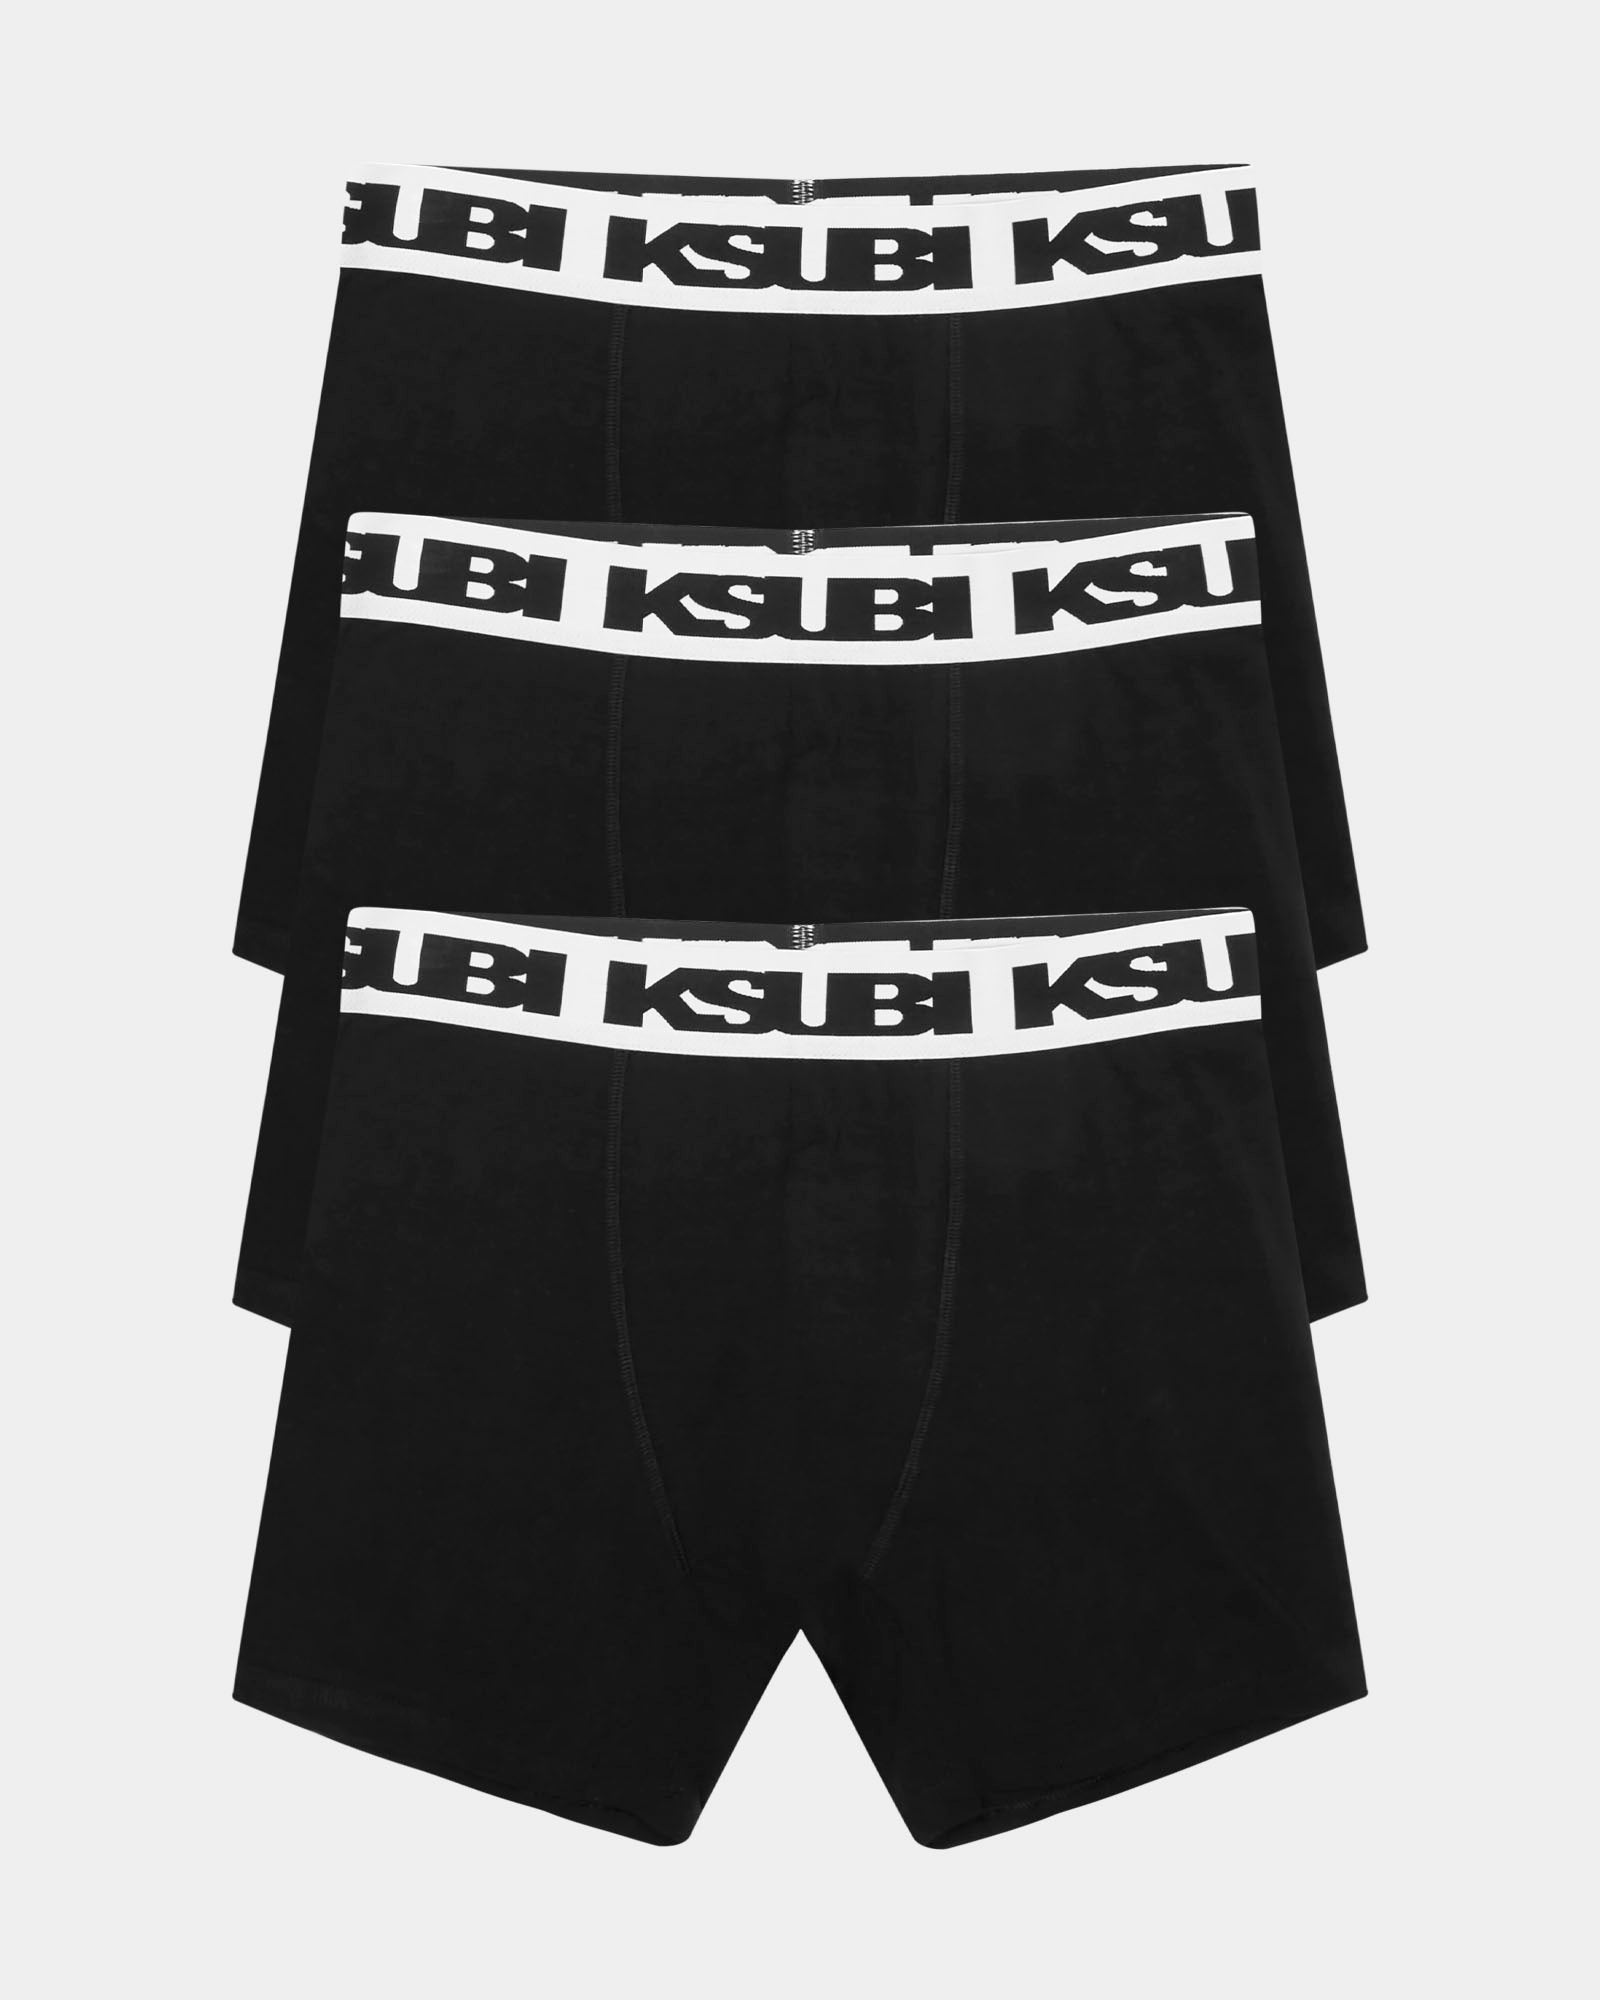 Design Custom Boxer Shorts - Unisex Cotton Boxer Shorts Underwear